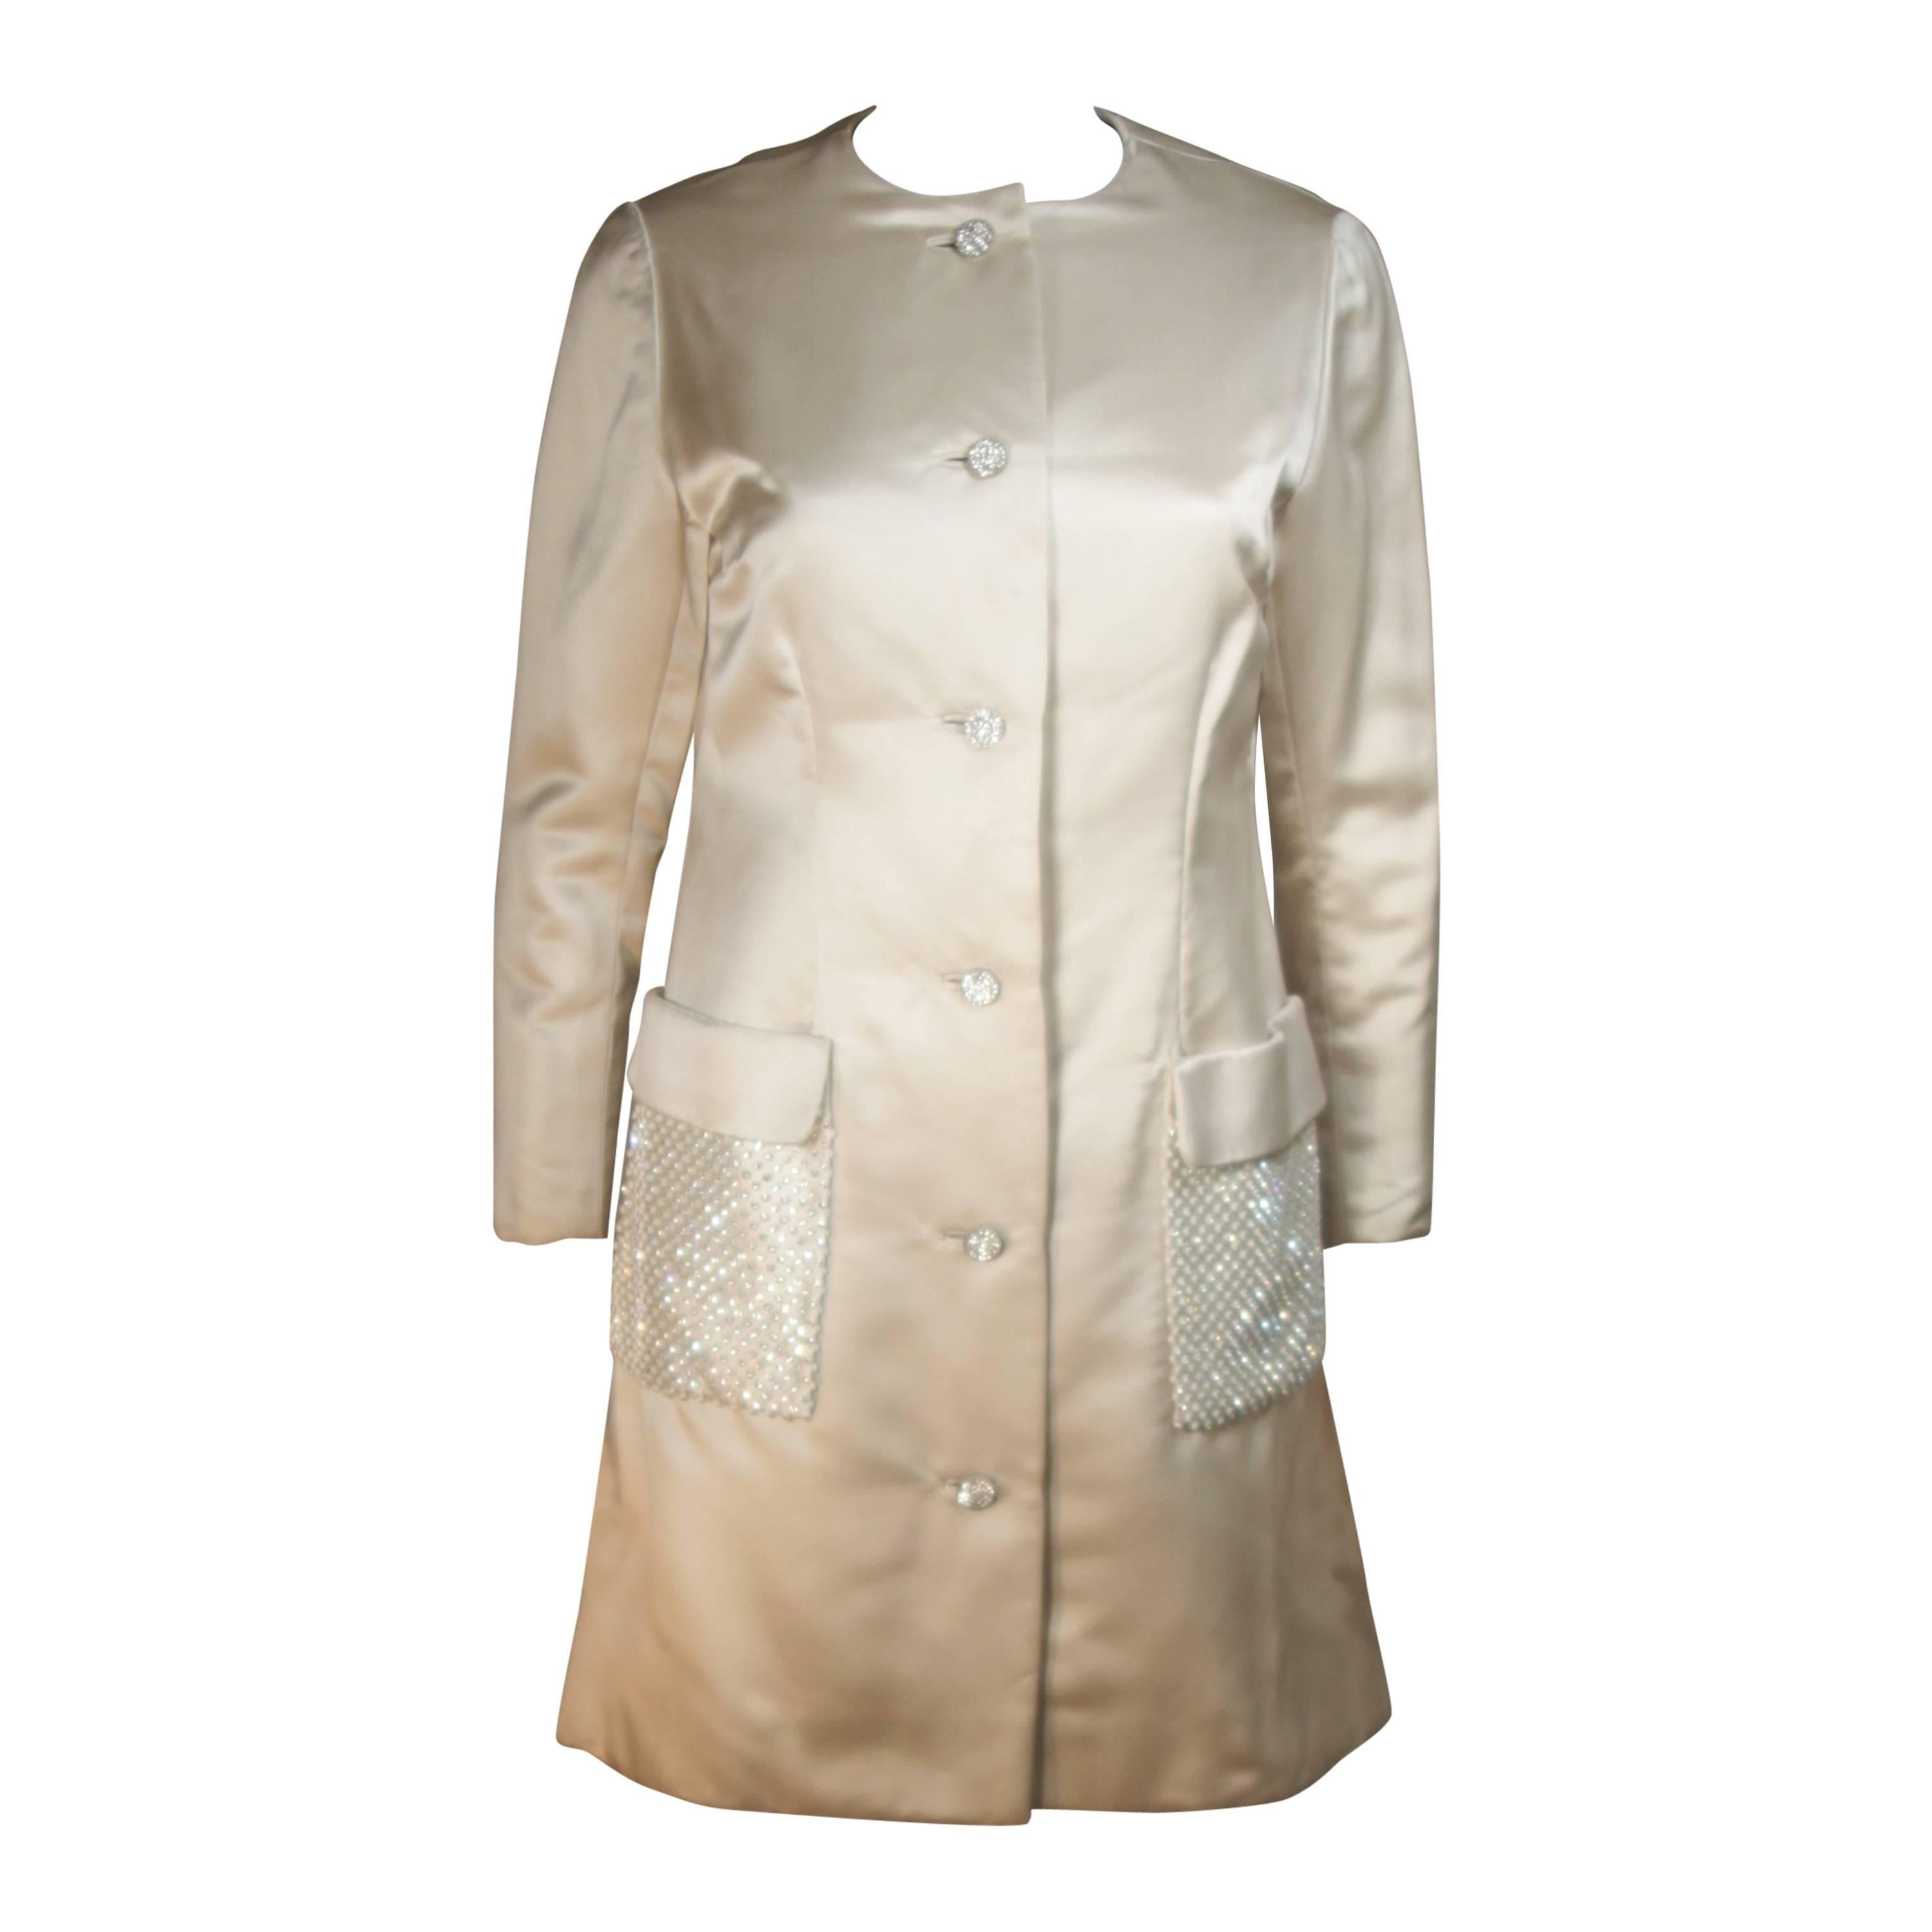 SHEDLOCK Ivory Silk Dress with Rhinestone Pocket Details Size Small Medium For Sale